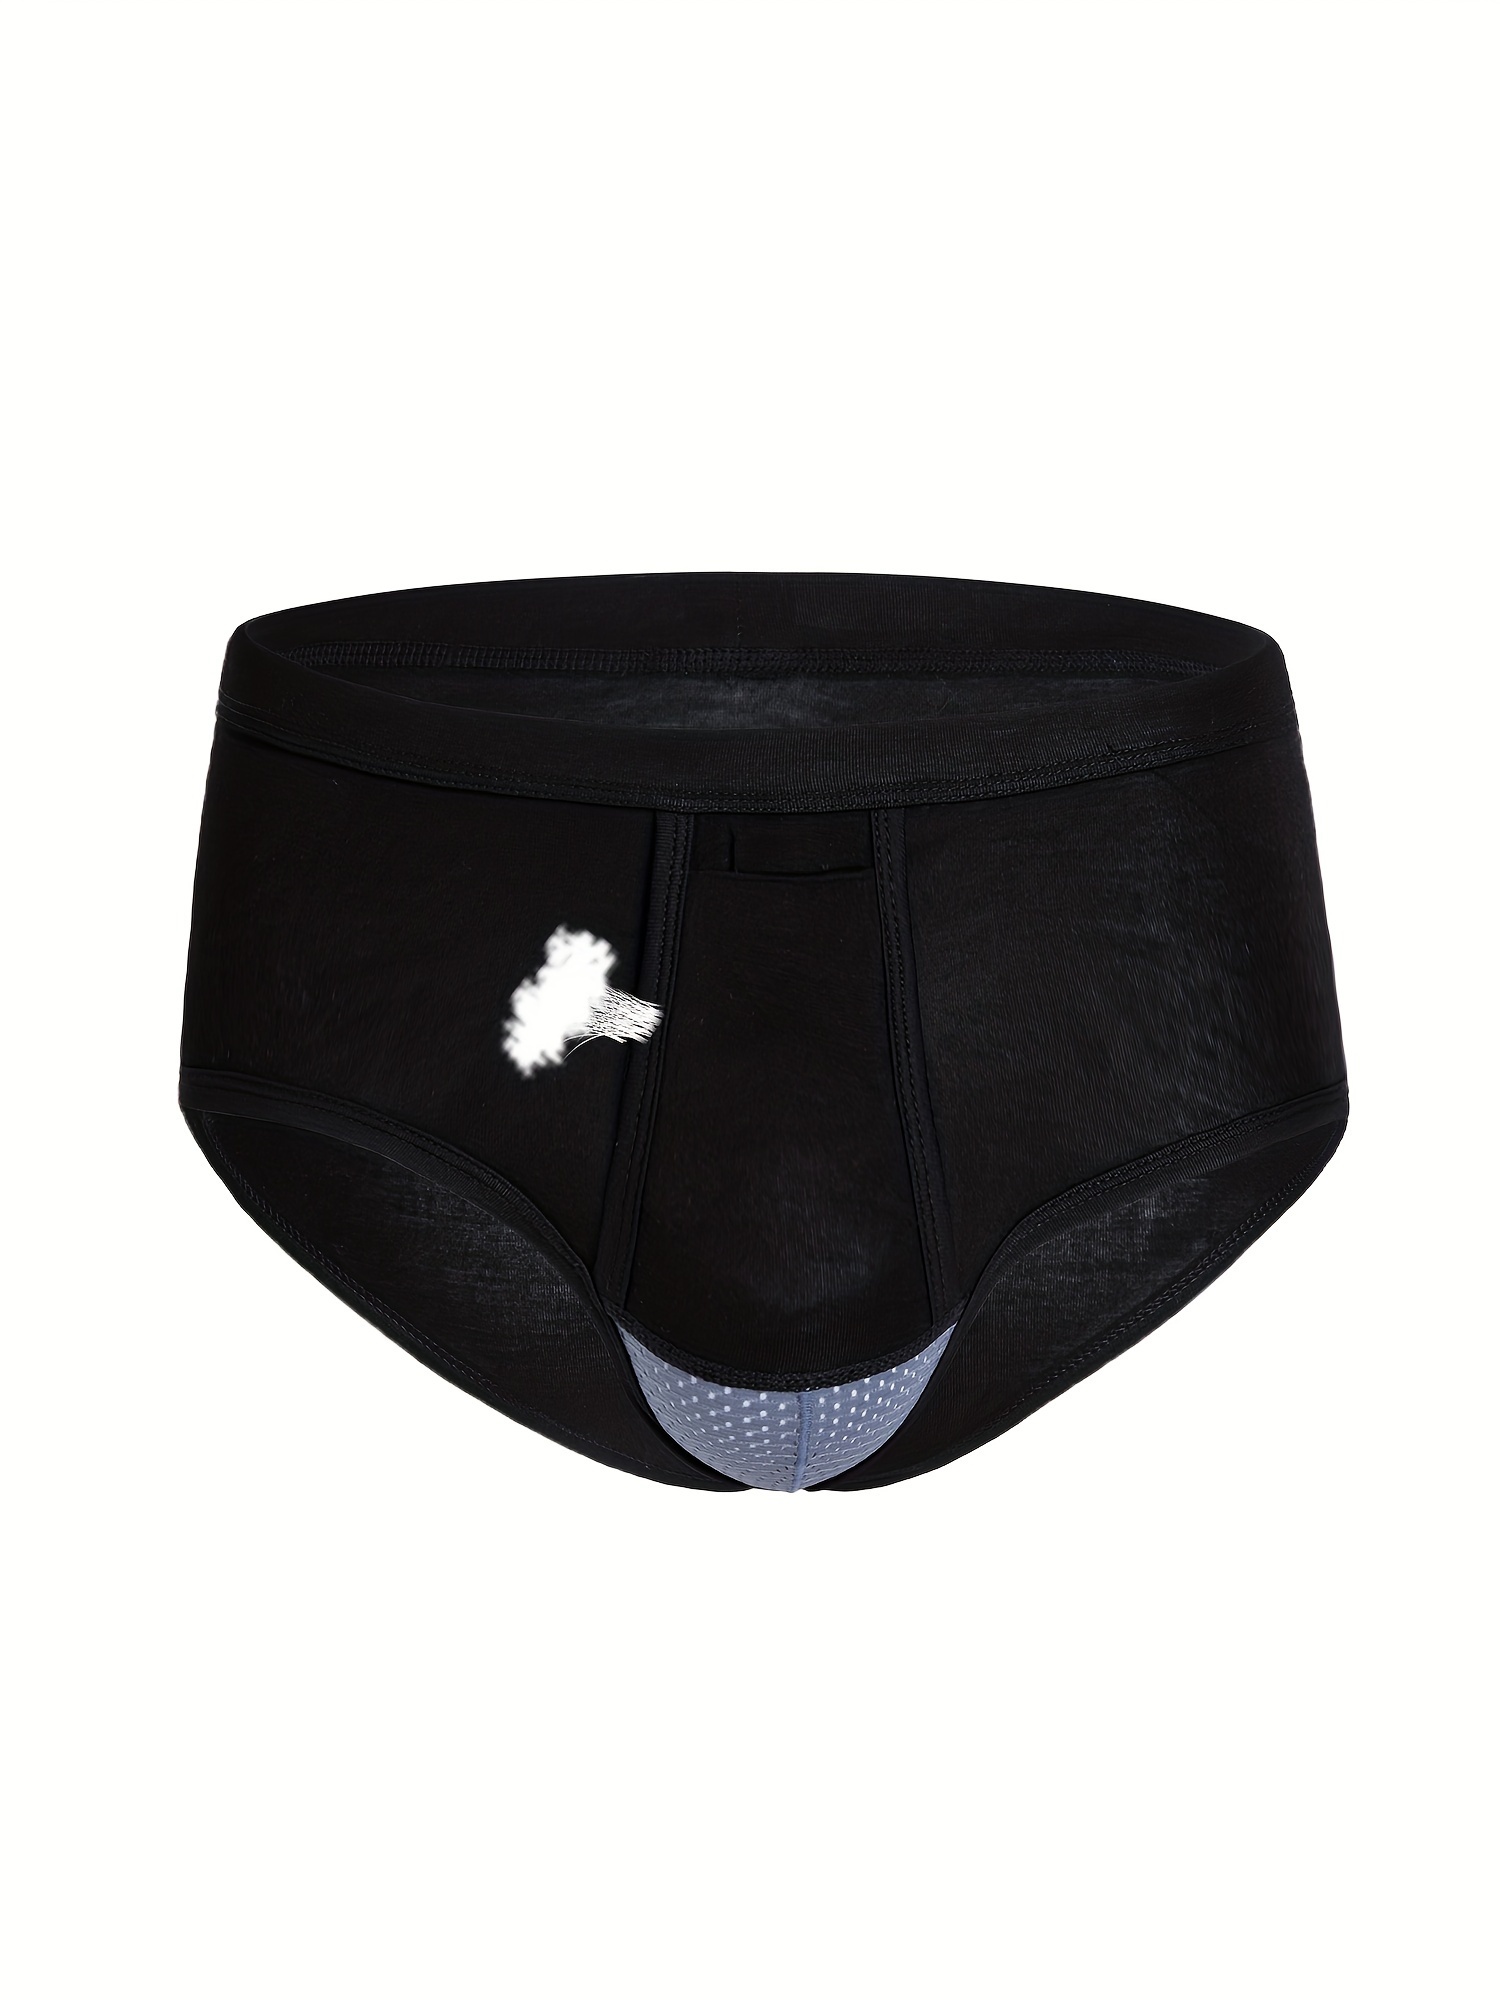 Naughty underwear, thongs, briefs, jockstraps, PVC, bulge enhancing – Clever